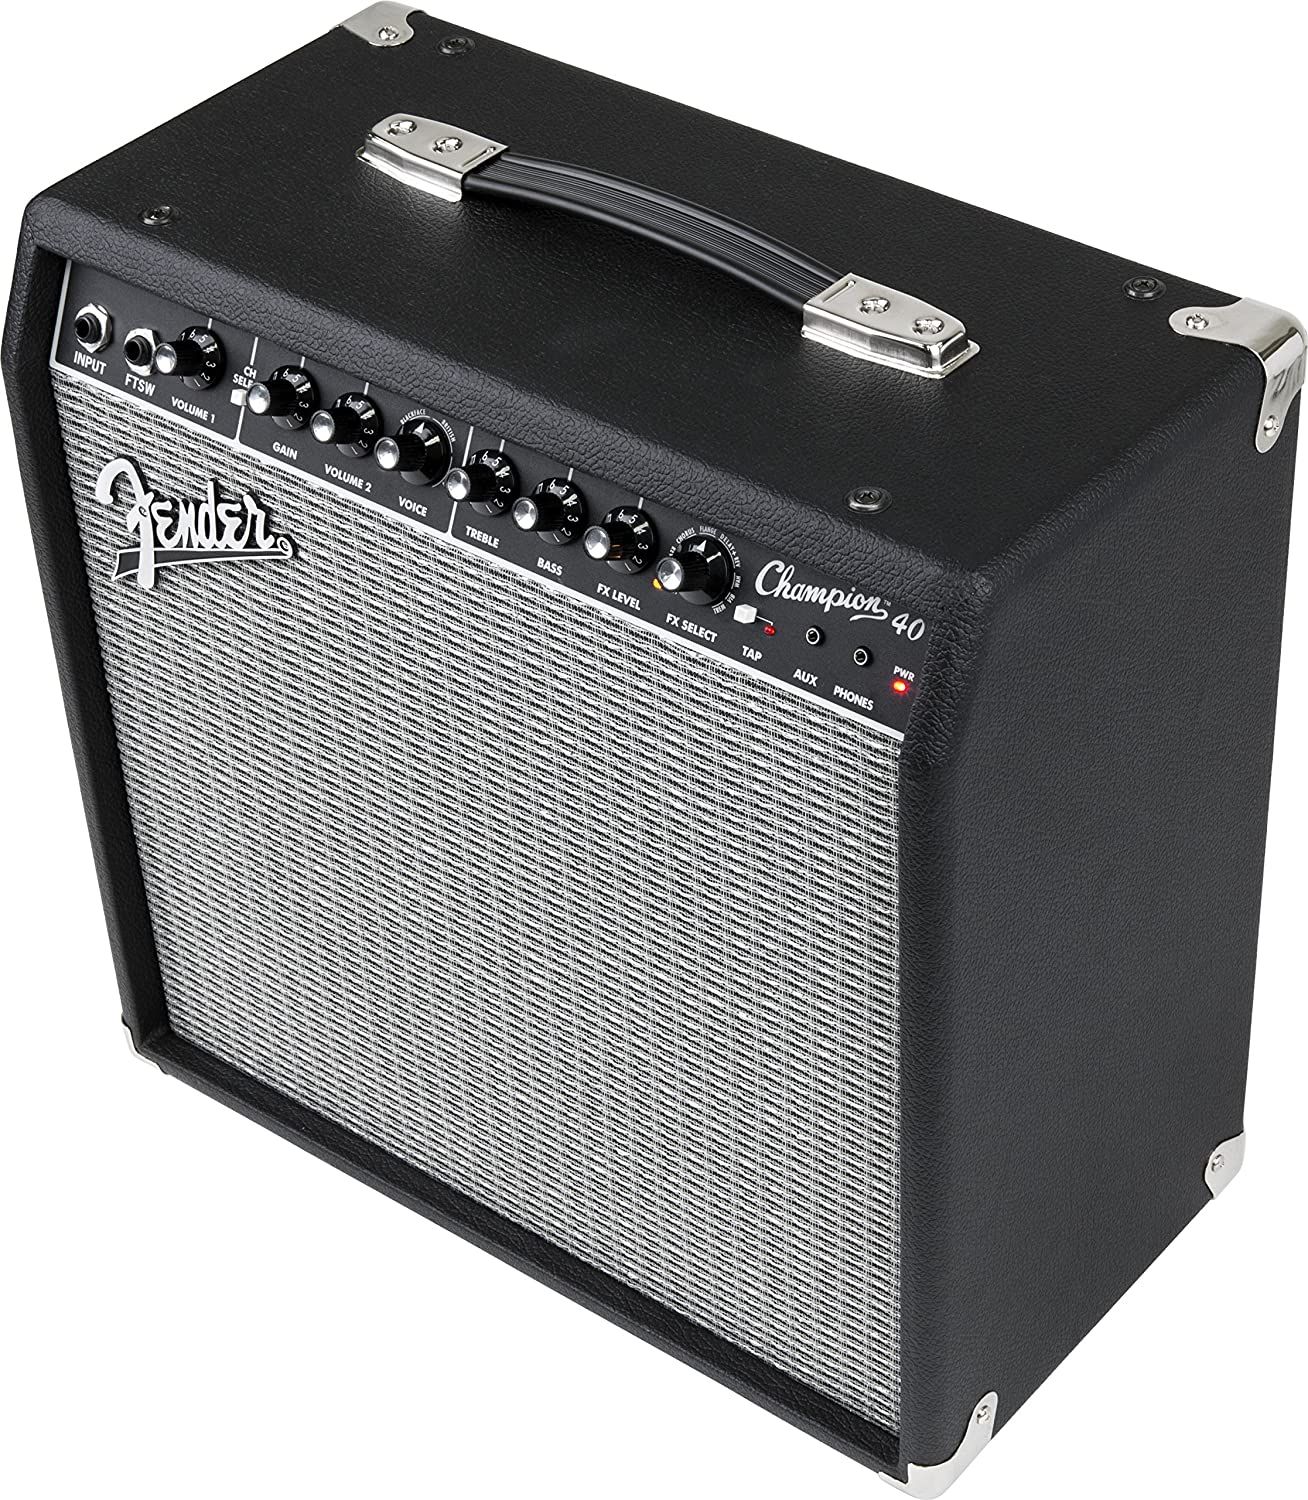 Fender Champion 40 12" 40-watt Combo Amp